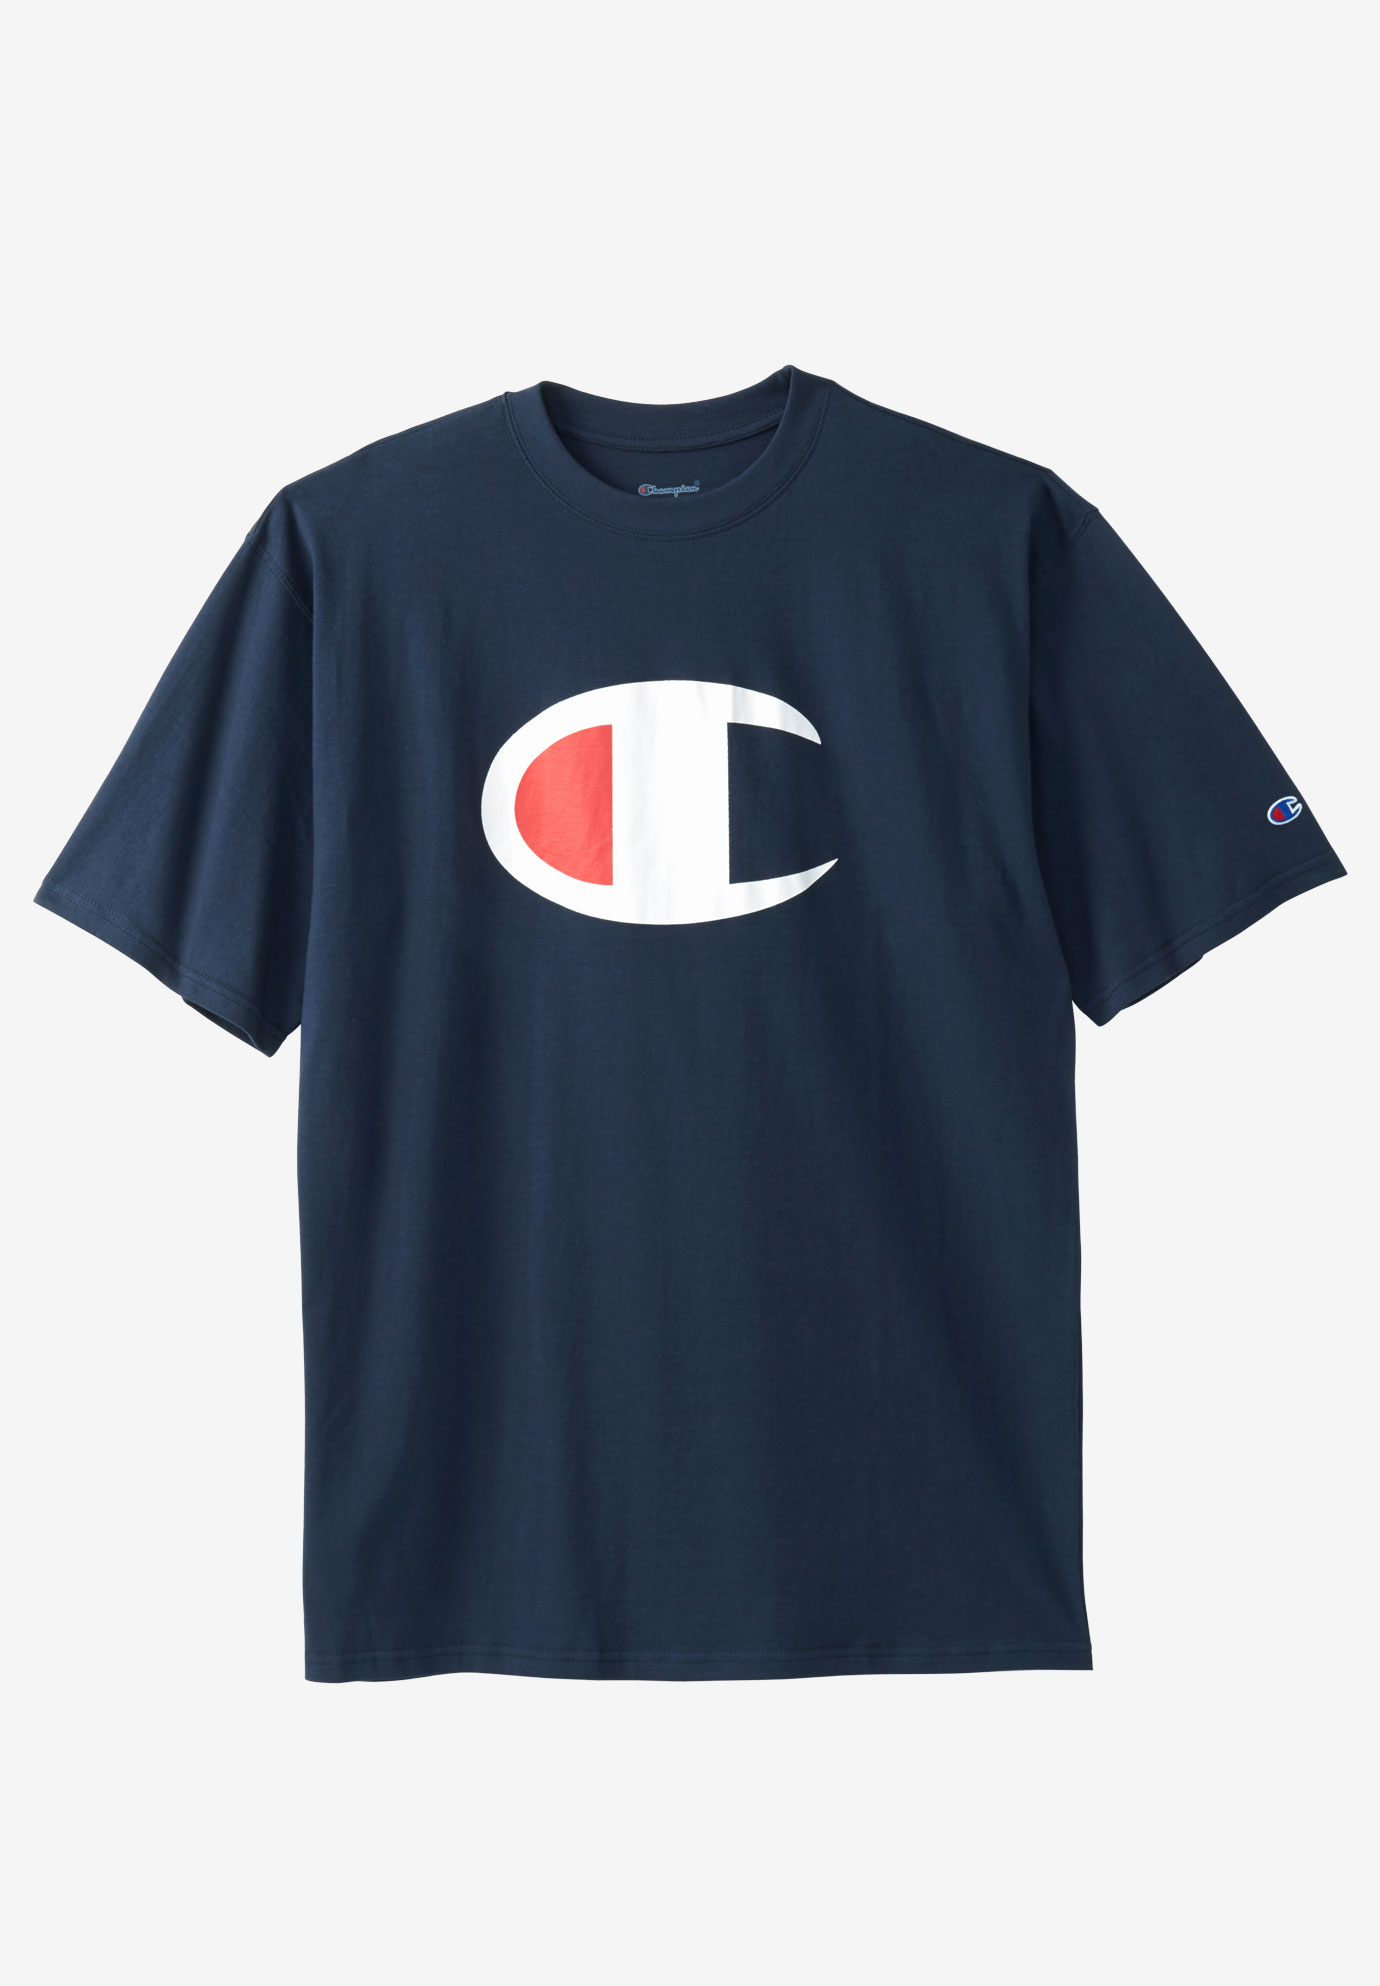 champion large logo t shirt